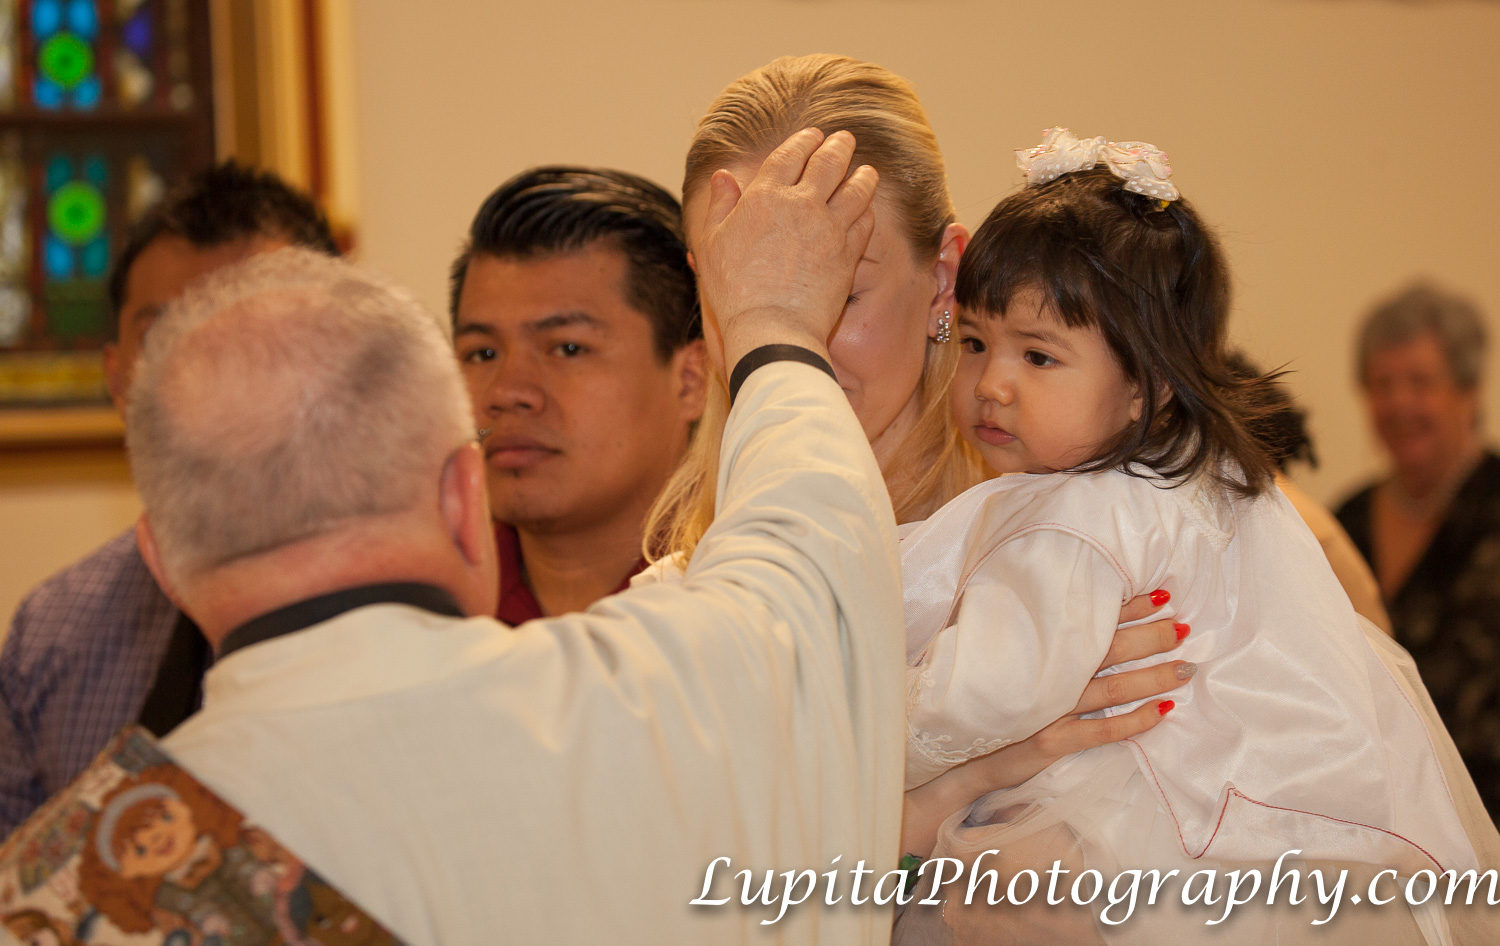 Ciudad de Nueva York - Niña celebrando su bautismo. New York City - Girl celebrating her baptism.